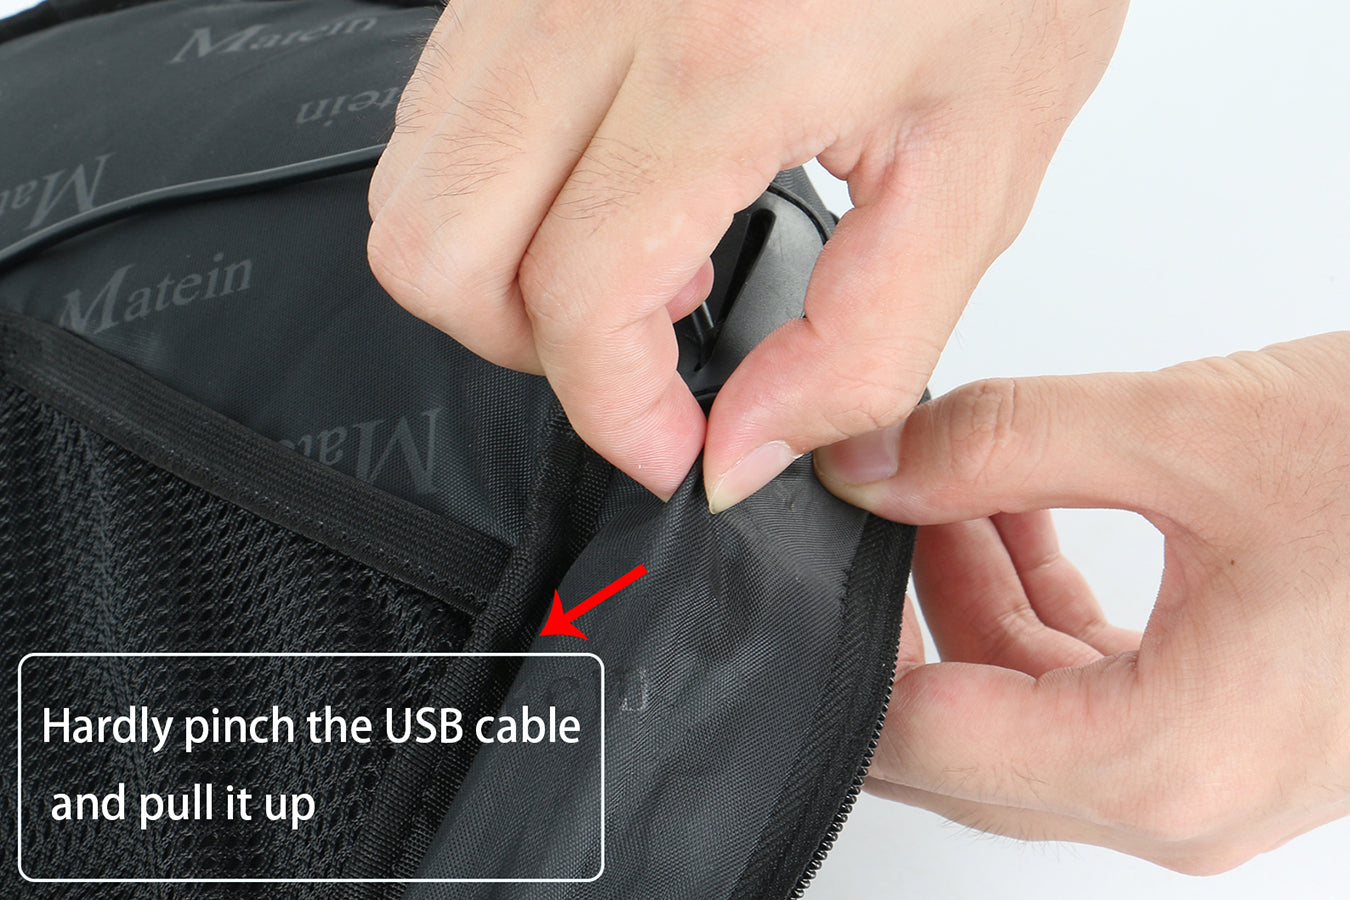 Matein USB port backpack washing instructions 